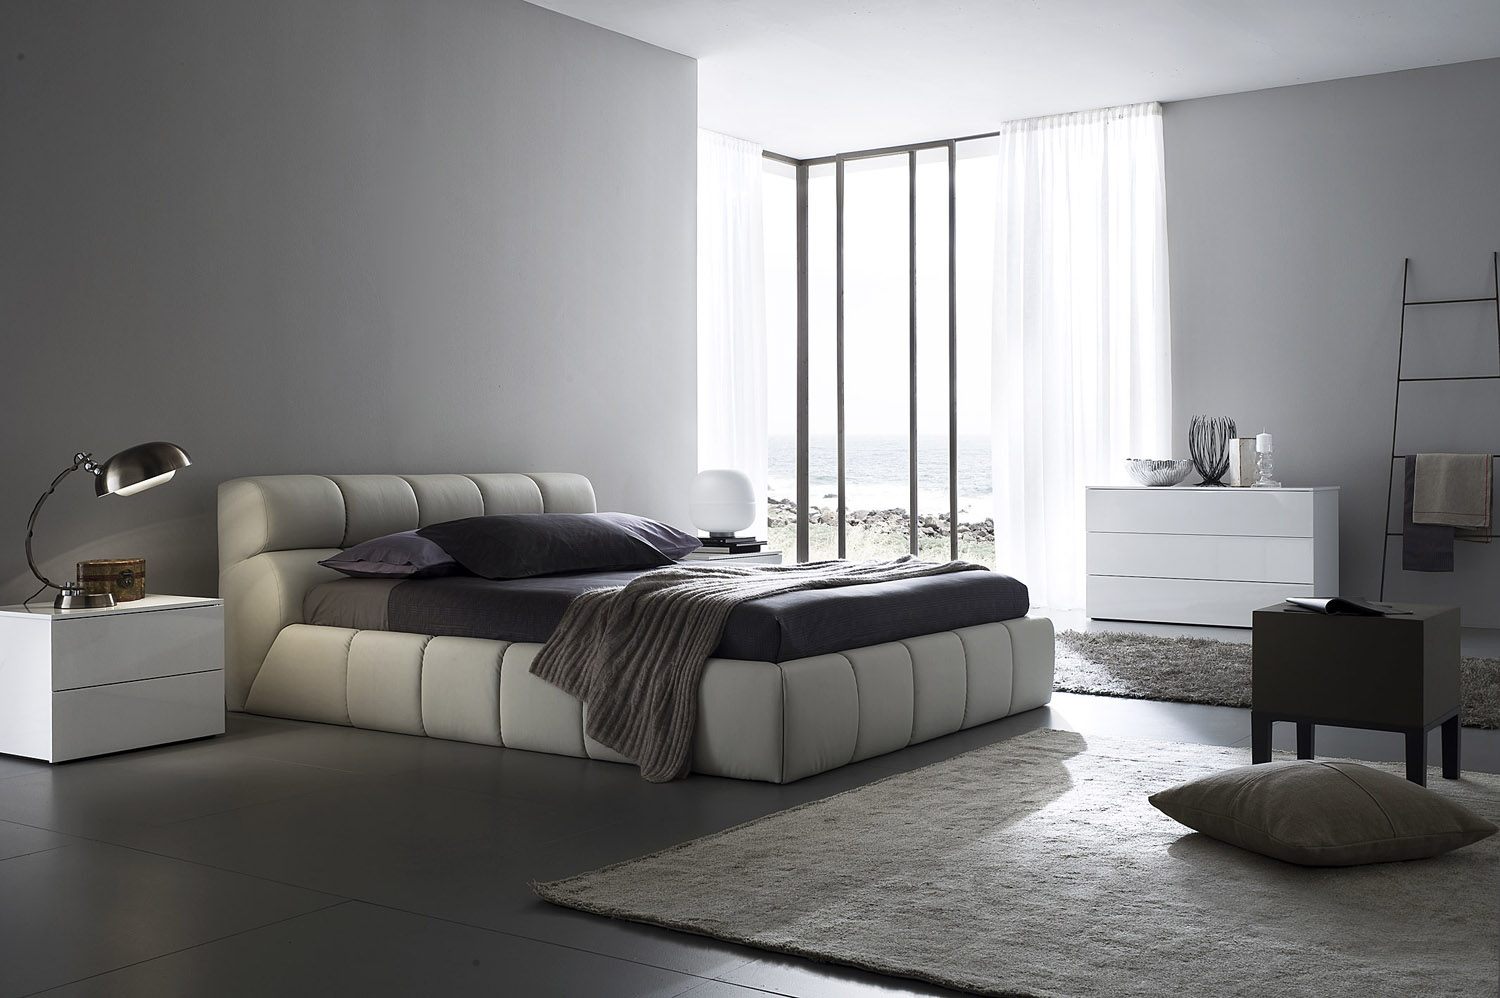 Decora o de quartos minimalista for Idee casa minimalista